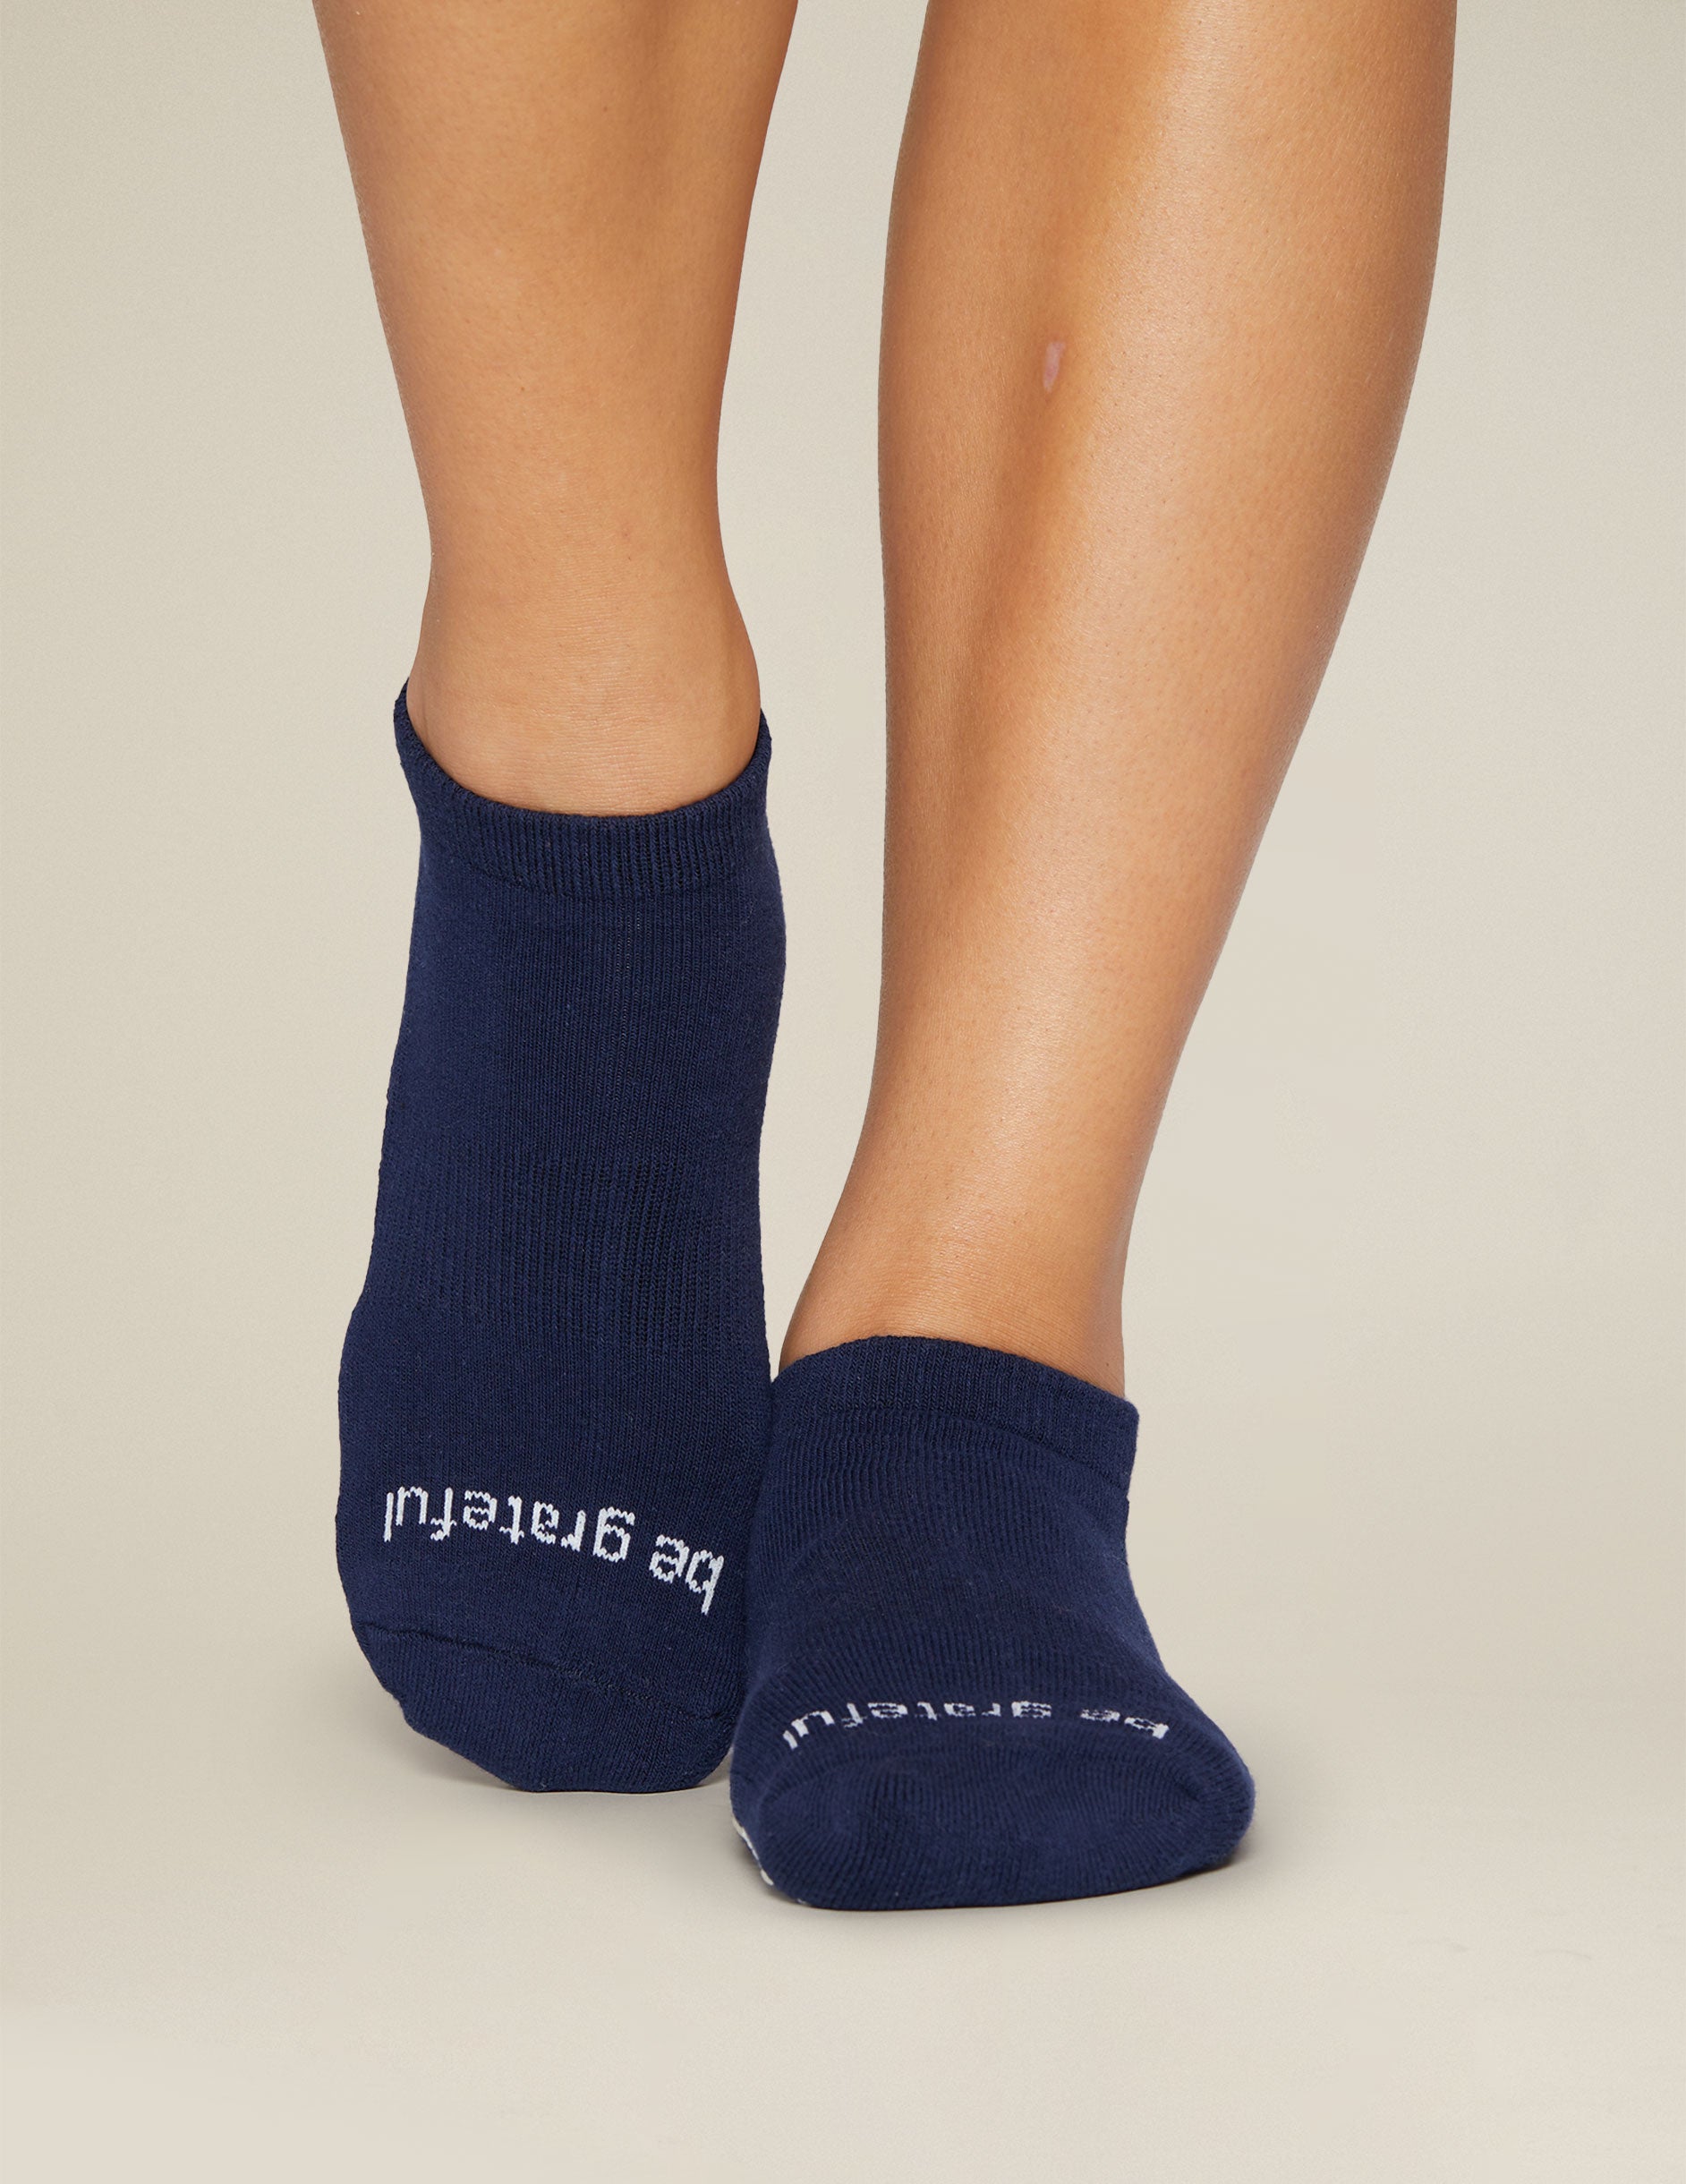 blue ankle length grip socks. 